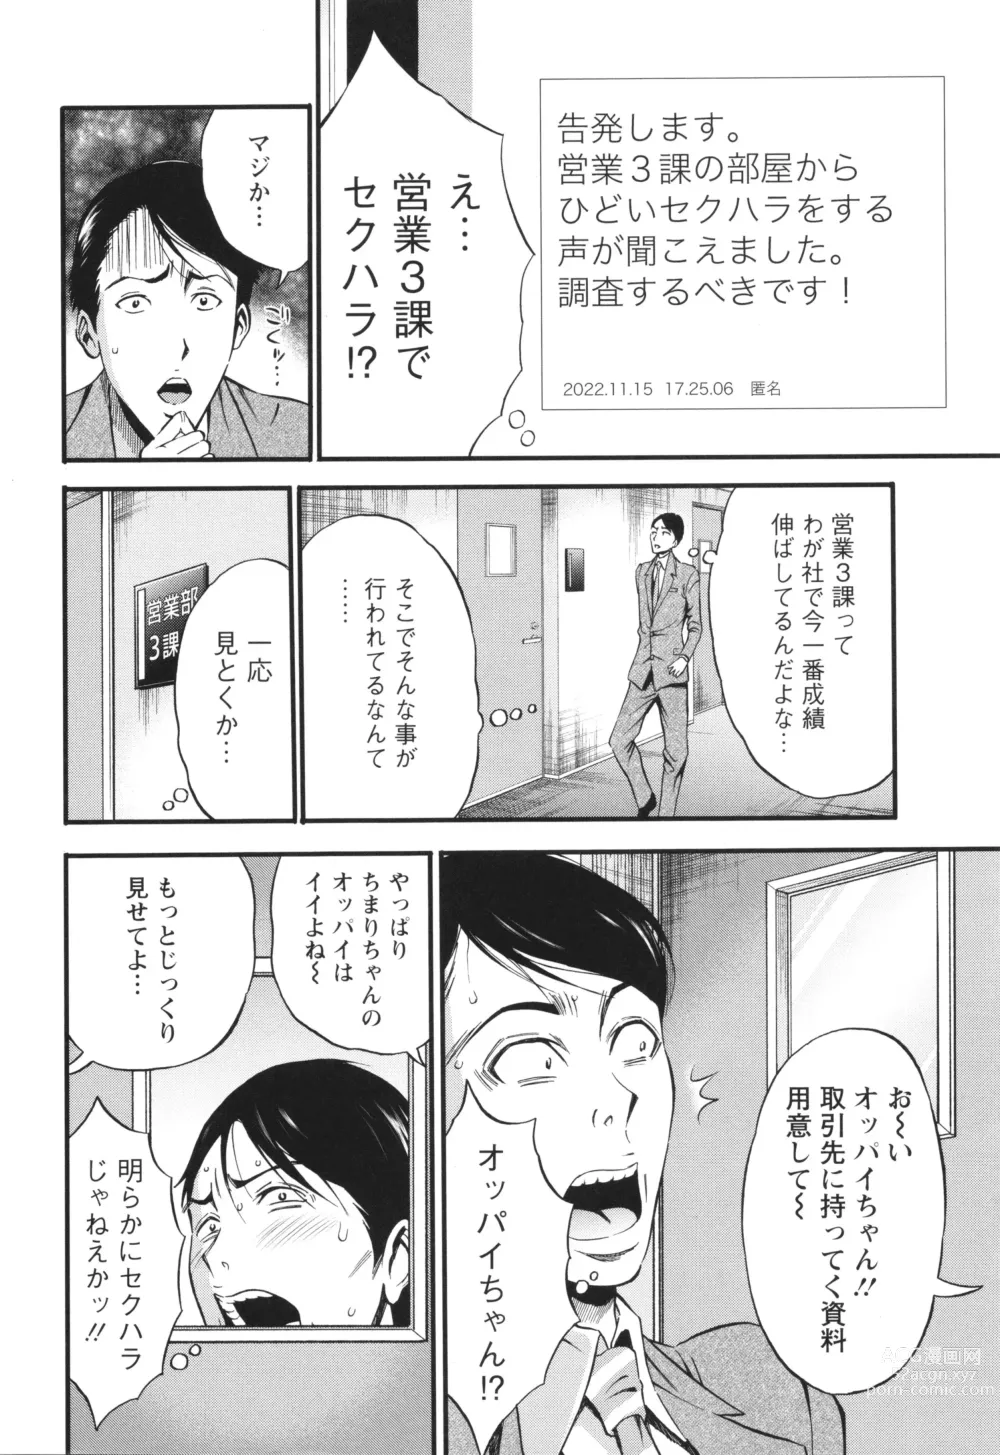 Page 12 of manga Compla Yuruyuru Chimari-san  - Chimaris compliance awareness is very lax.